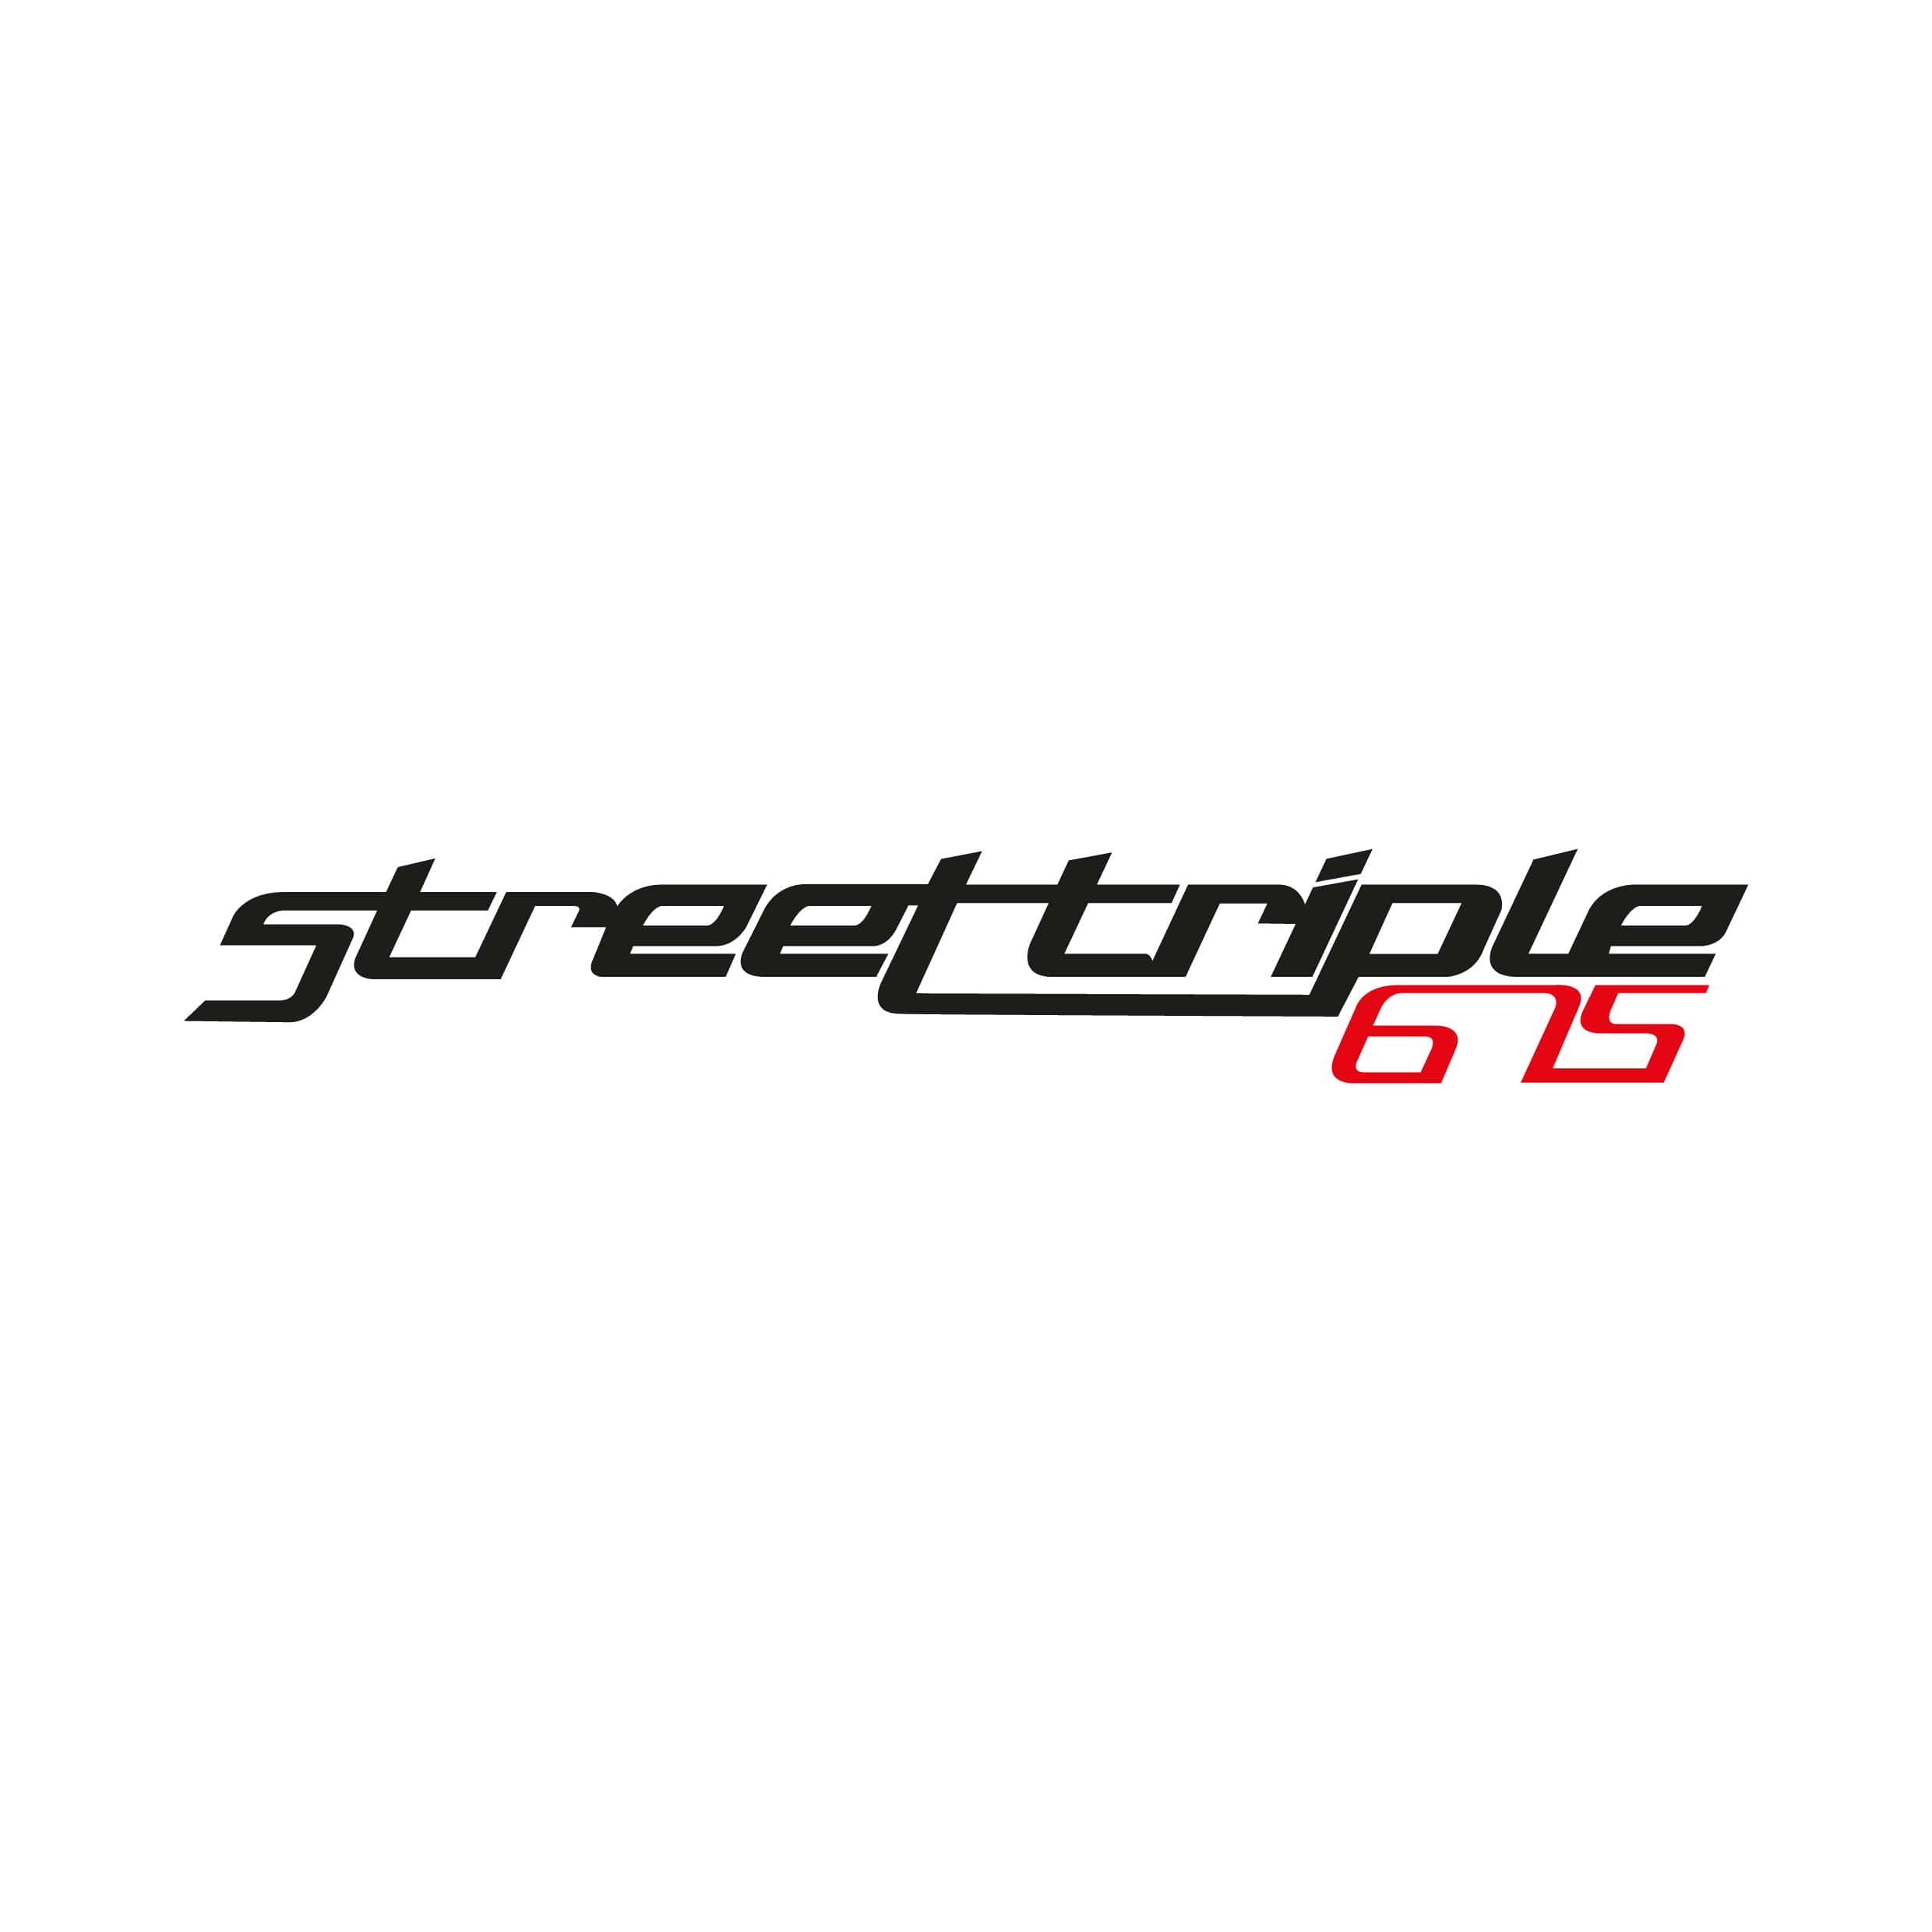 stickers-street-triple-675-triumph-ref19-autocollant-moto-sticker-deux-roue-autocollants-decals-sponsors-tuning-sport-logo-bike-scooter-min